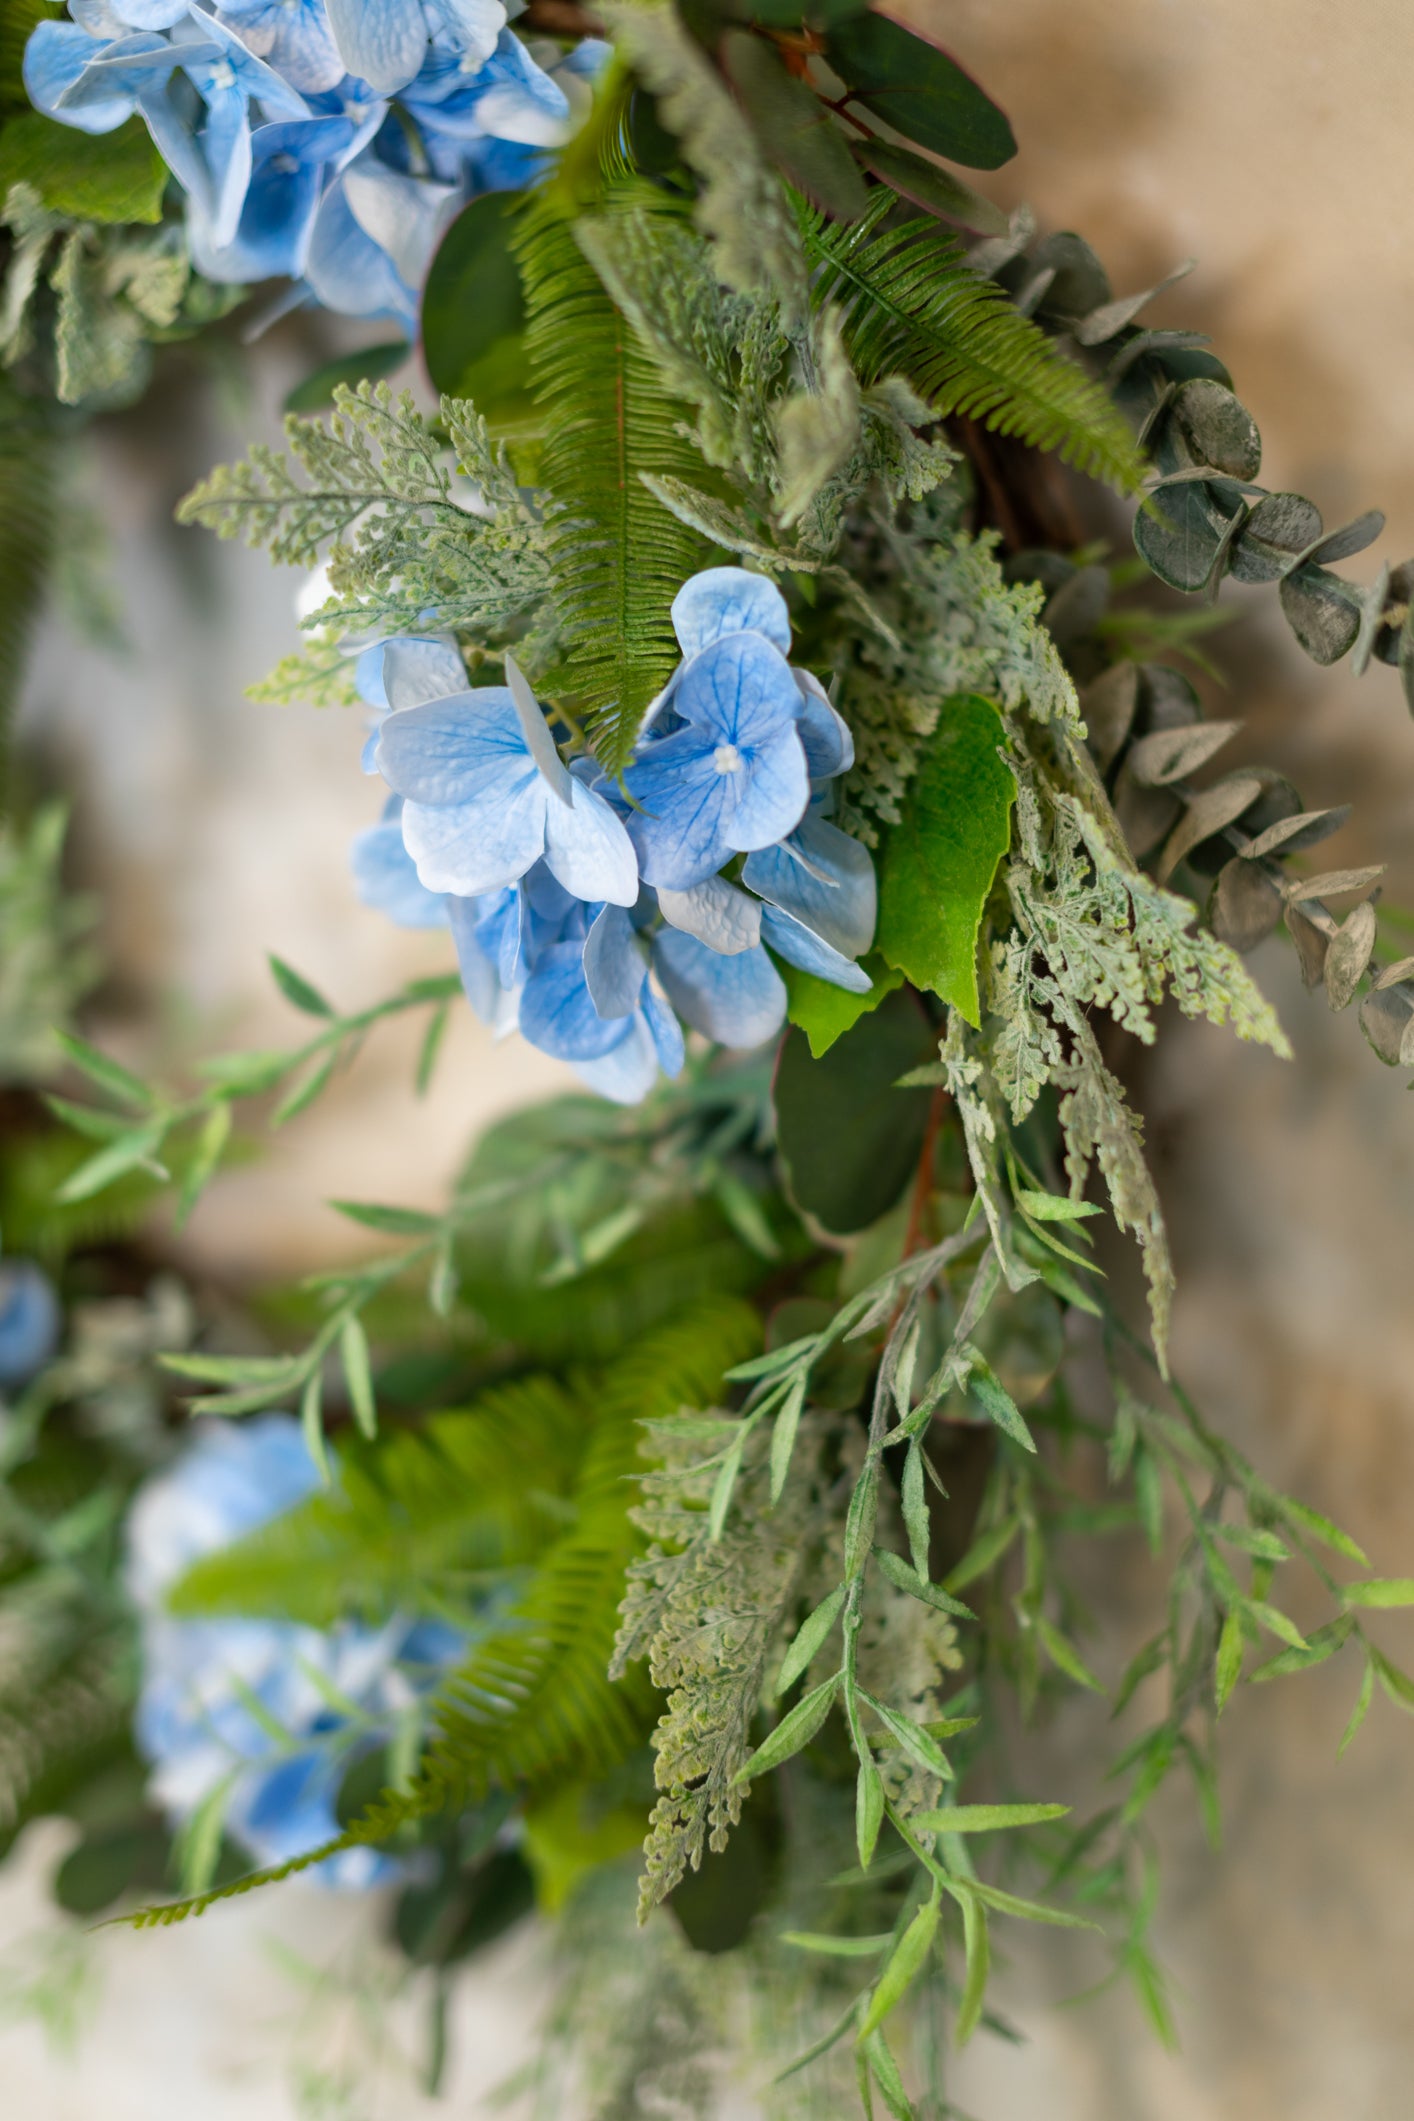 Blue Hydrangea Wreath